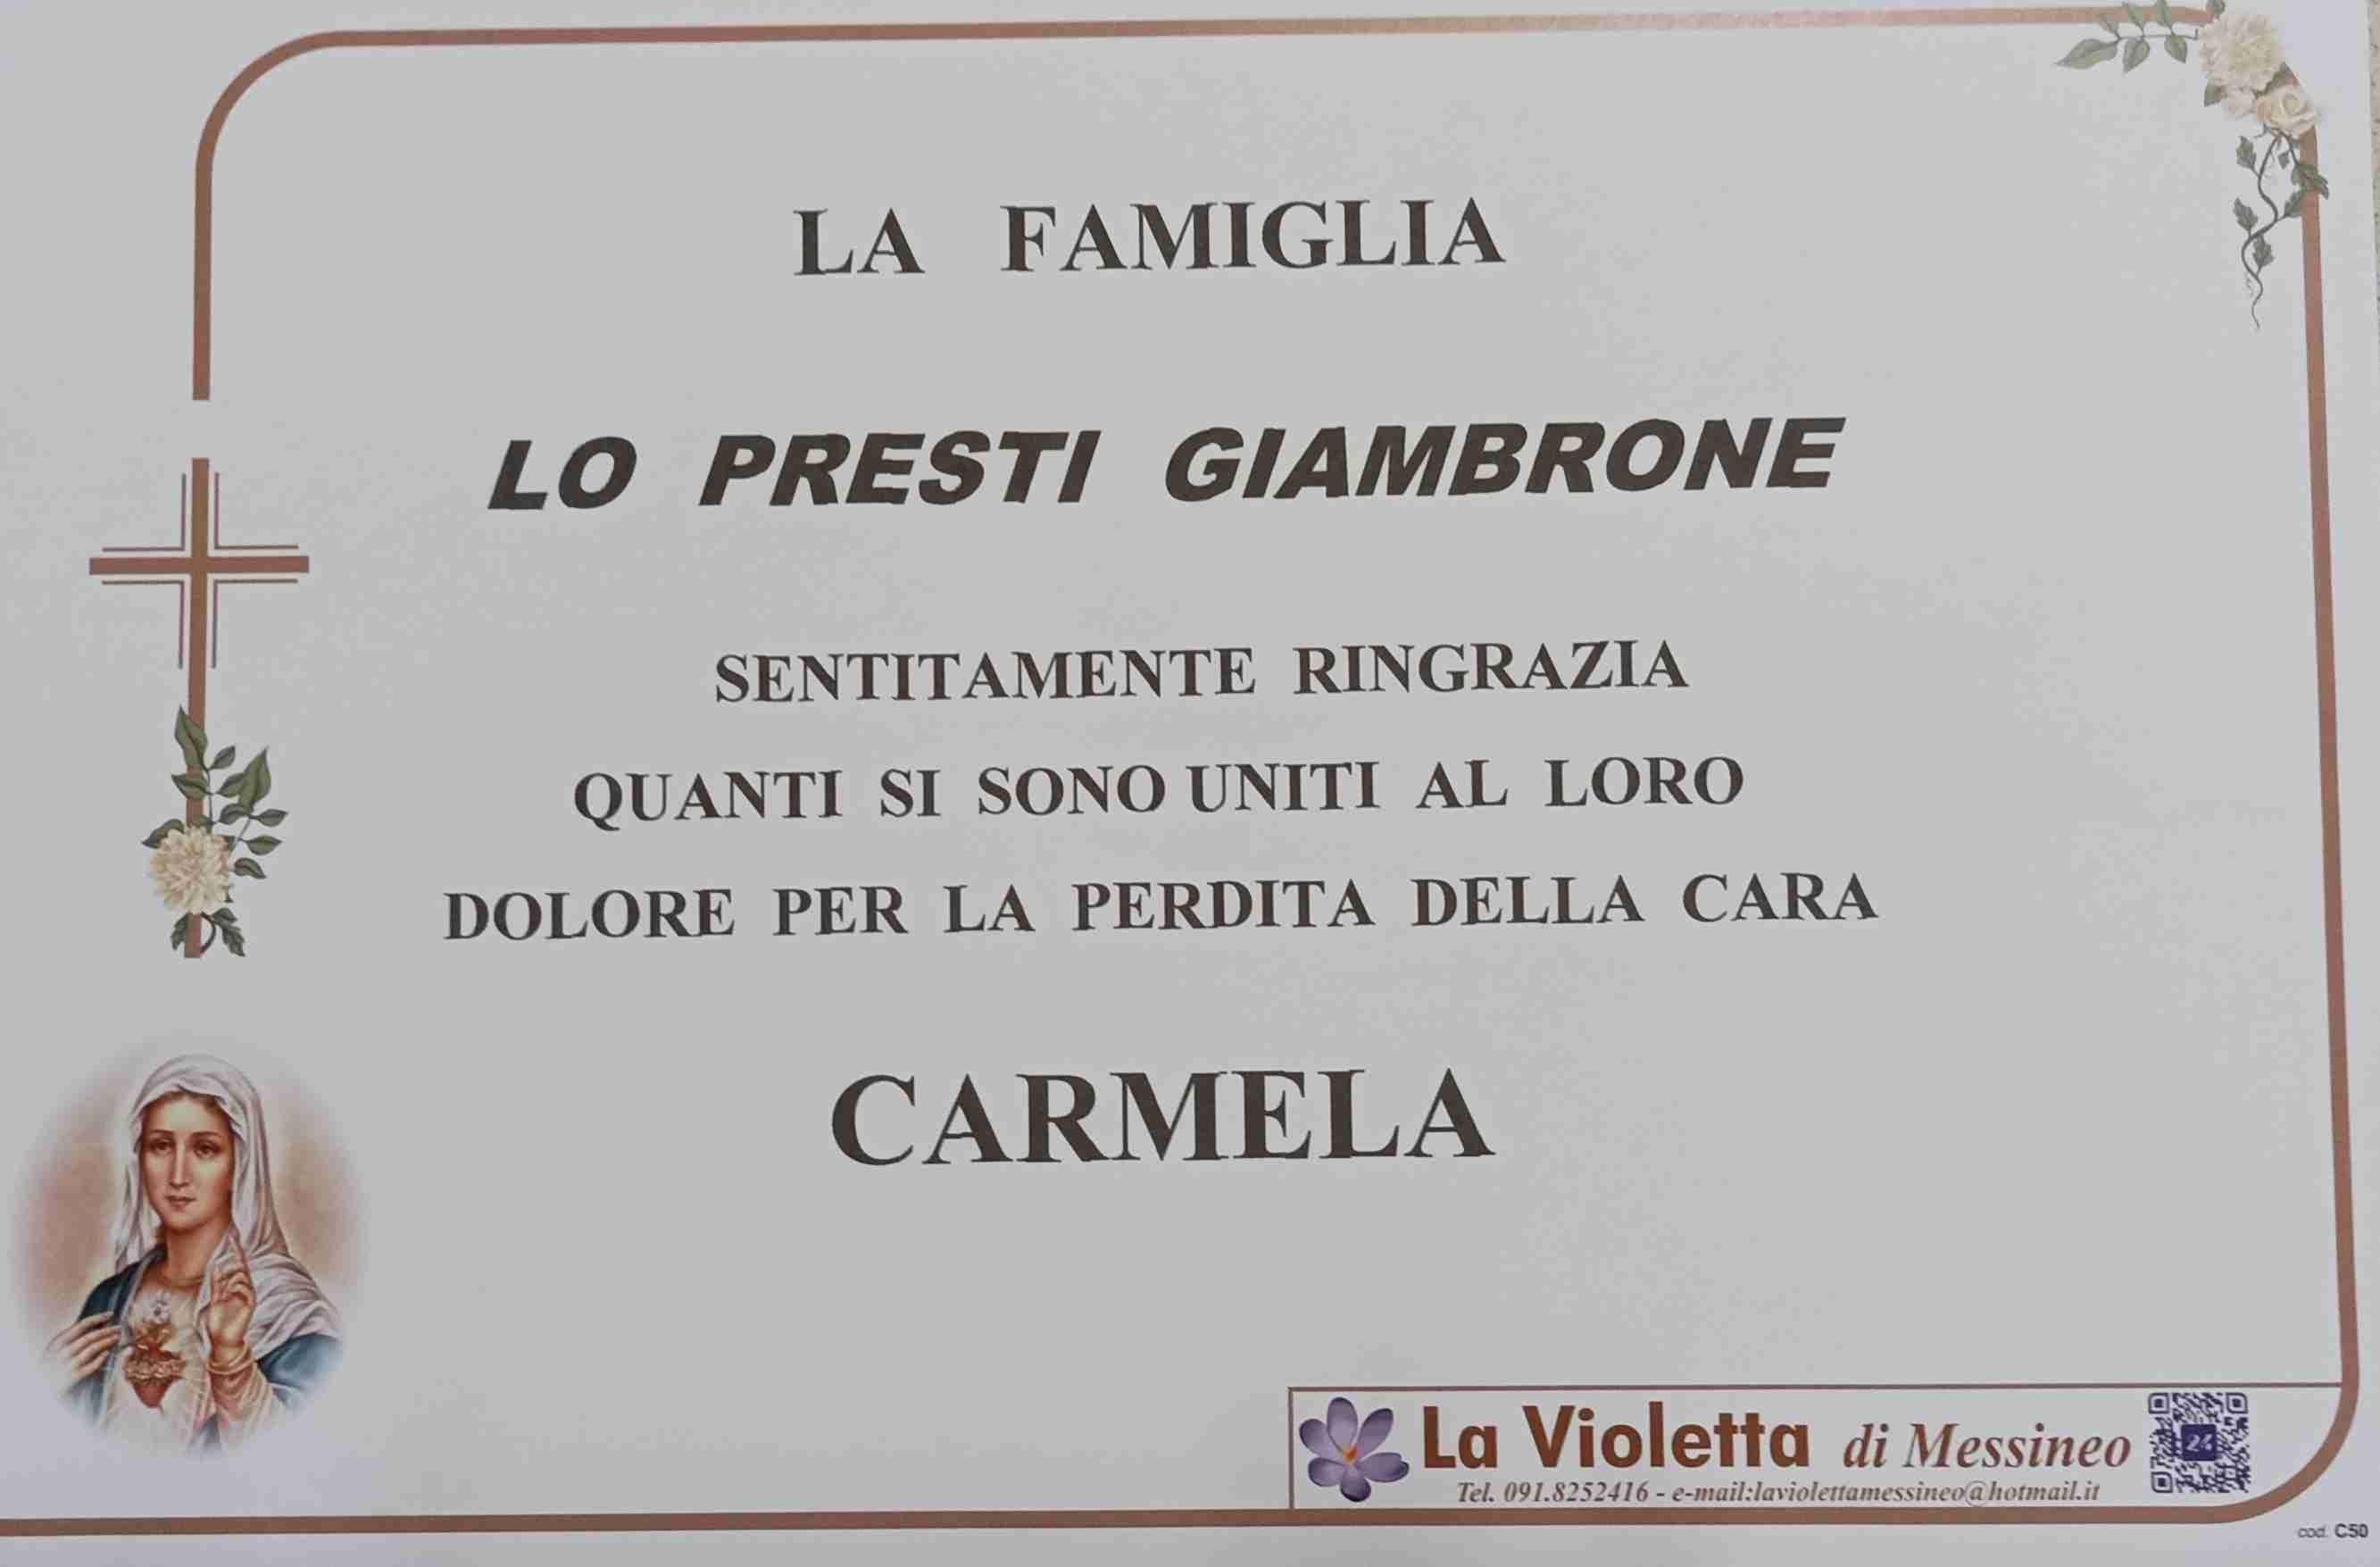 Carmela Giambrone